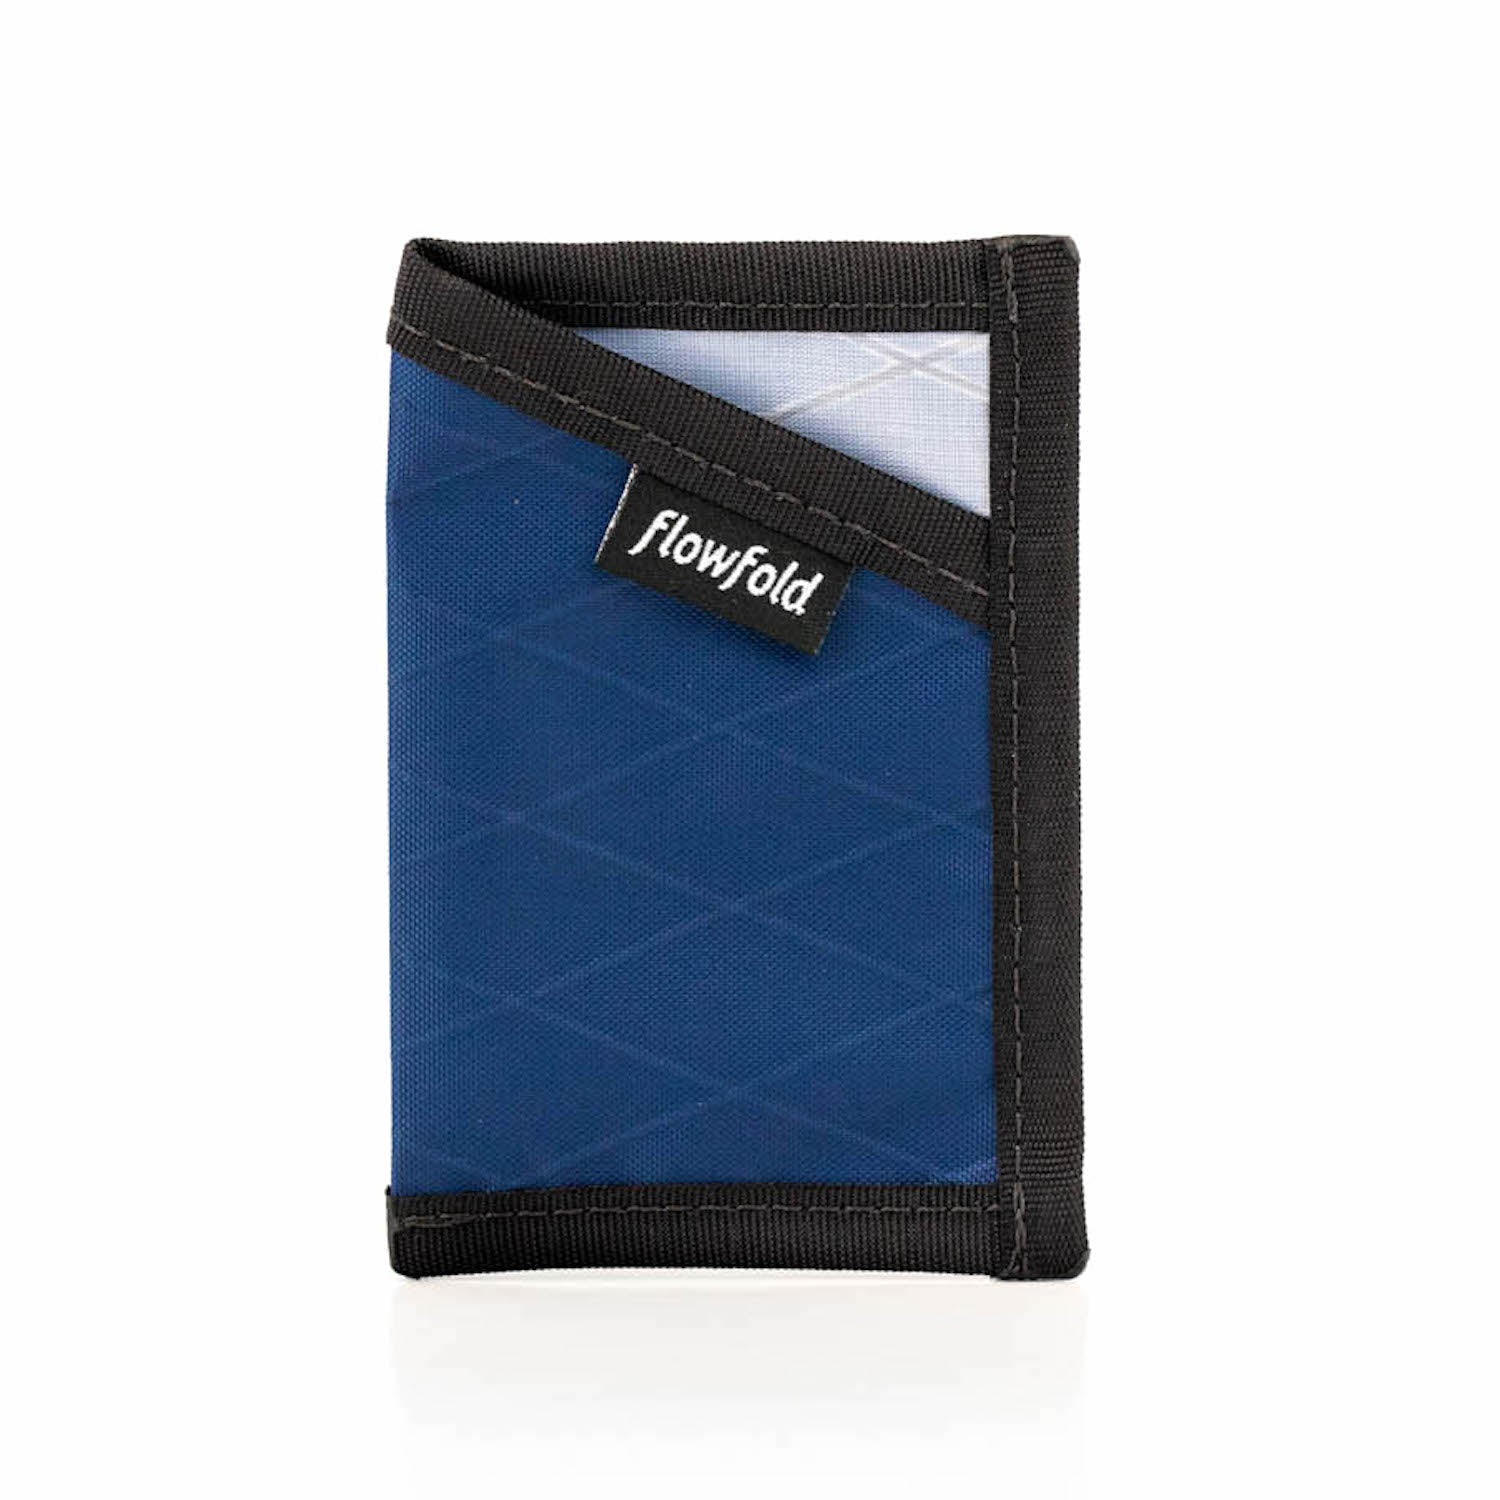 Flowfold Ultra Slim RFID Blocking Minimalist Card Holder Wallet Navy Blue 